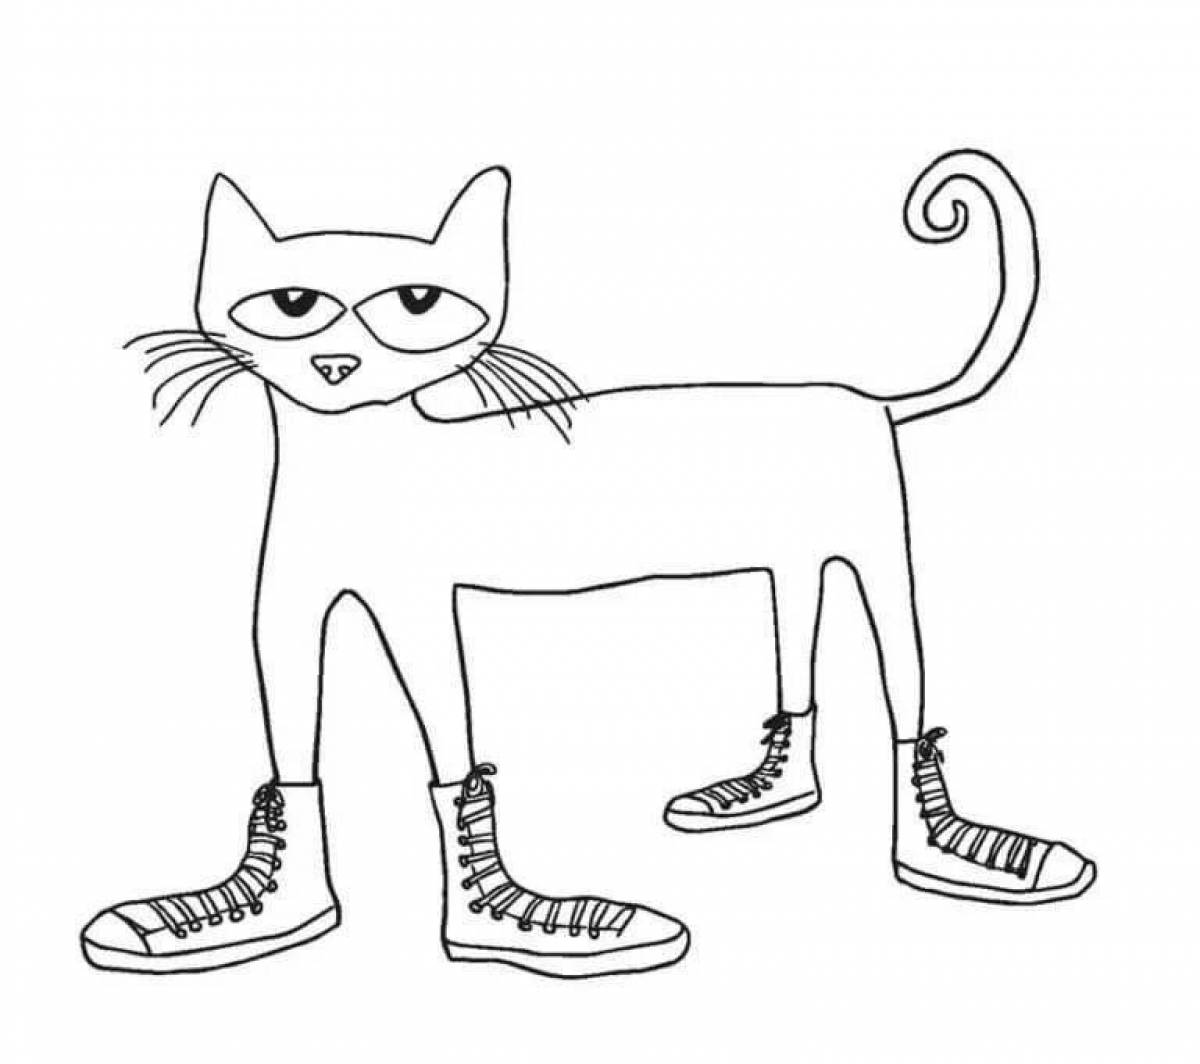 Puckish funny cats coloring book